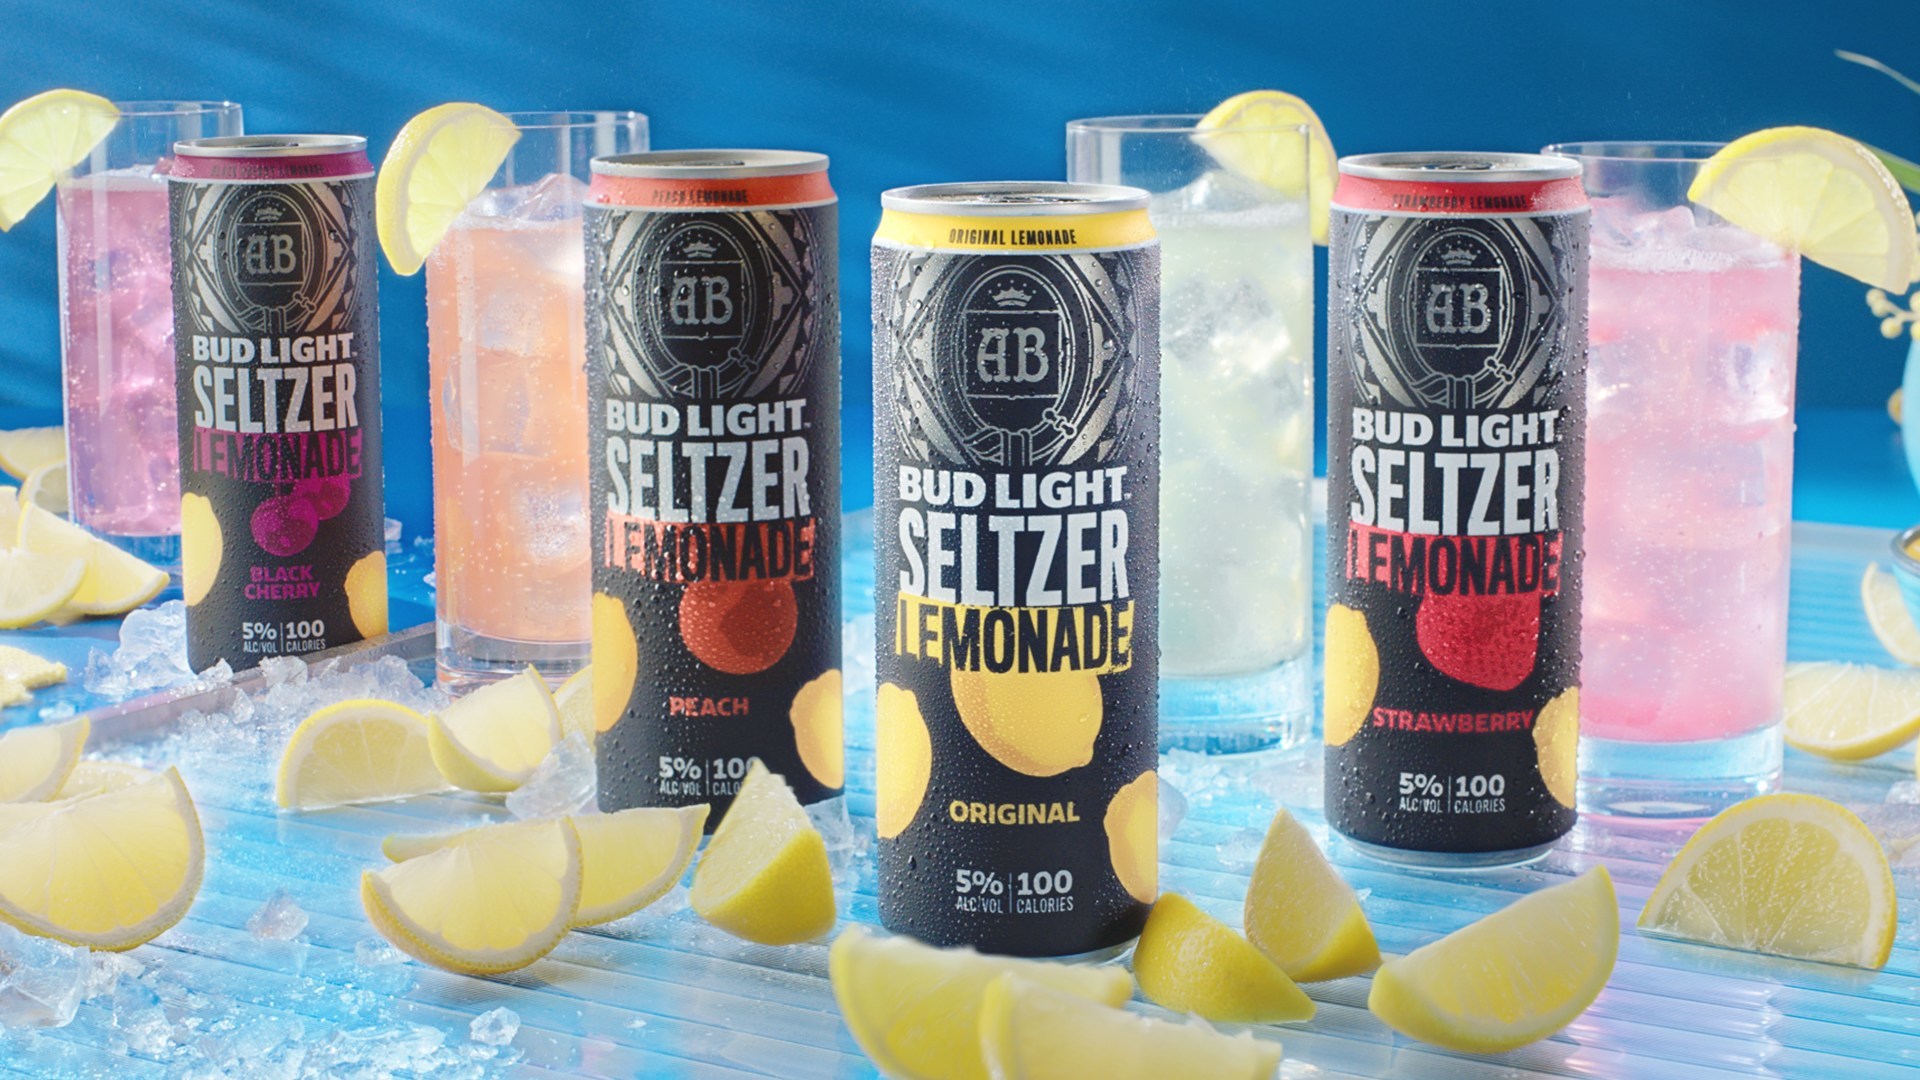 Bud Light Seltzer Lemonade Key Visual